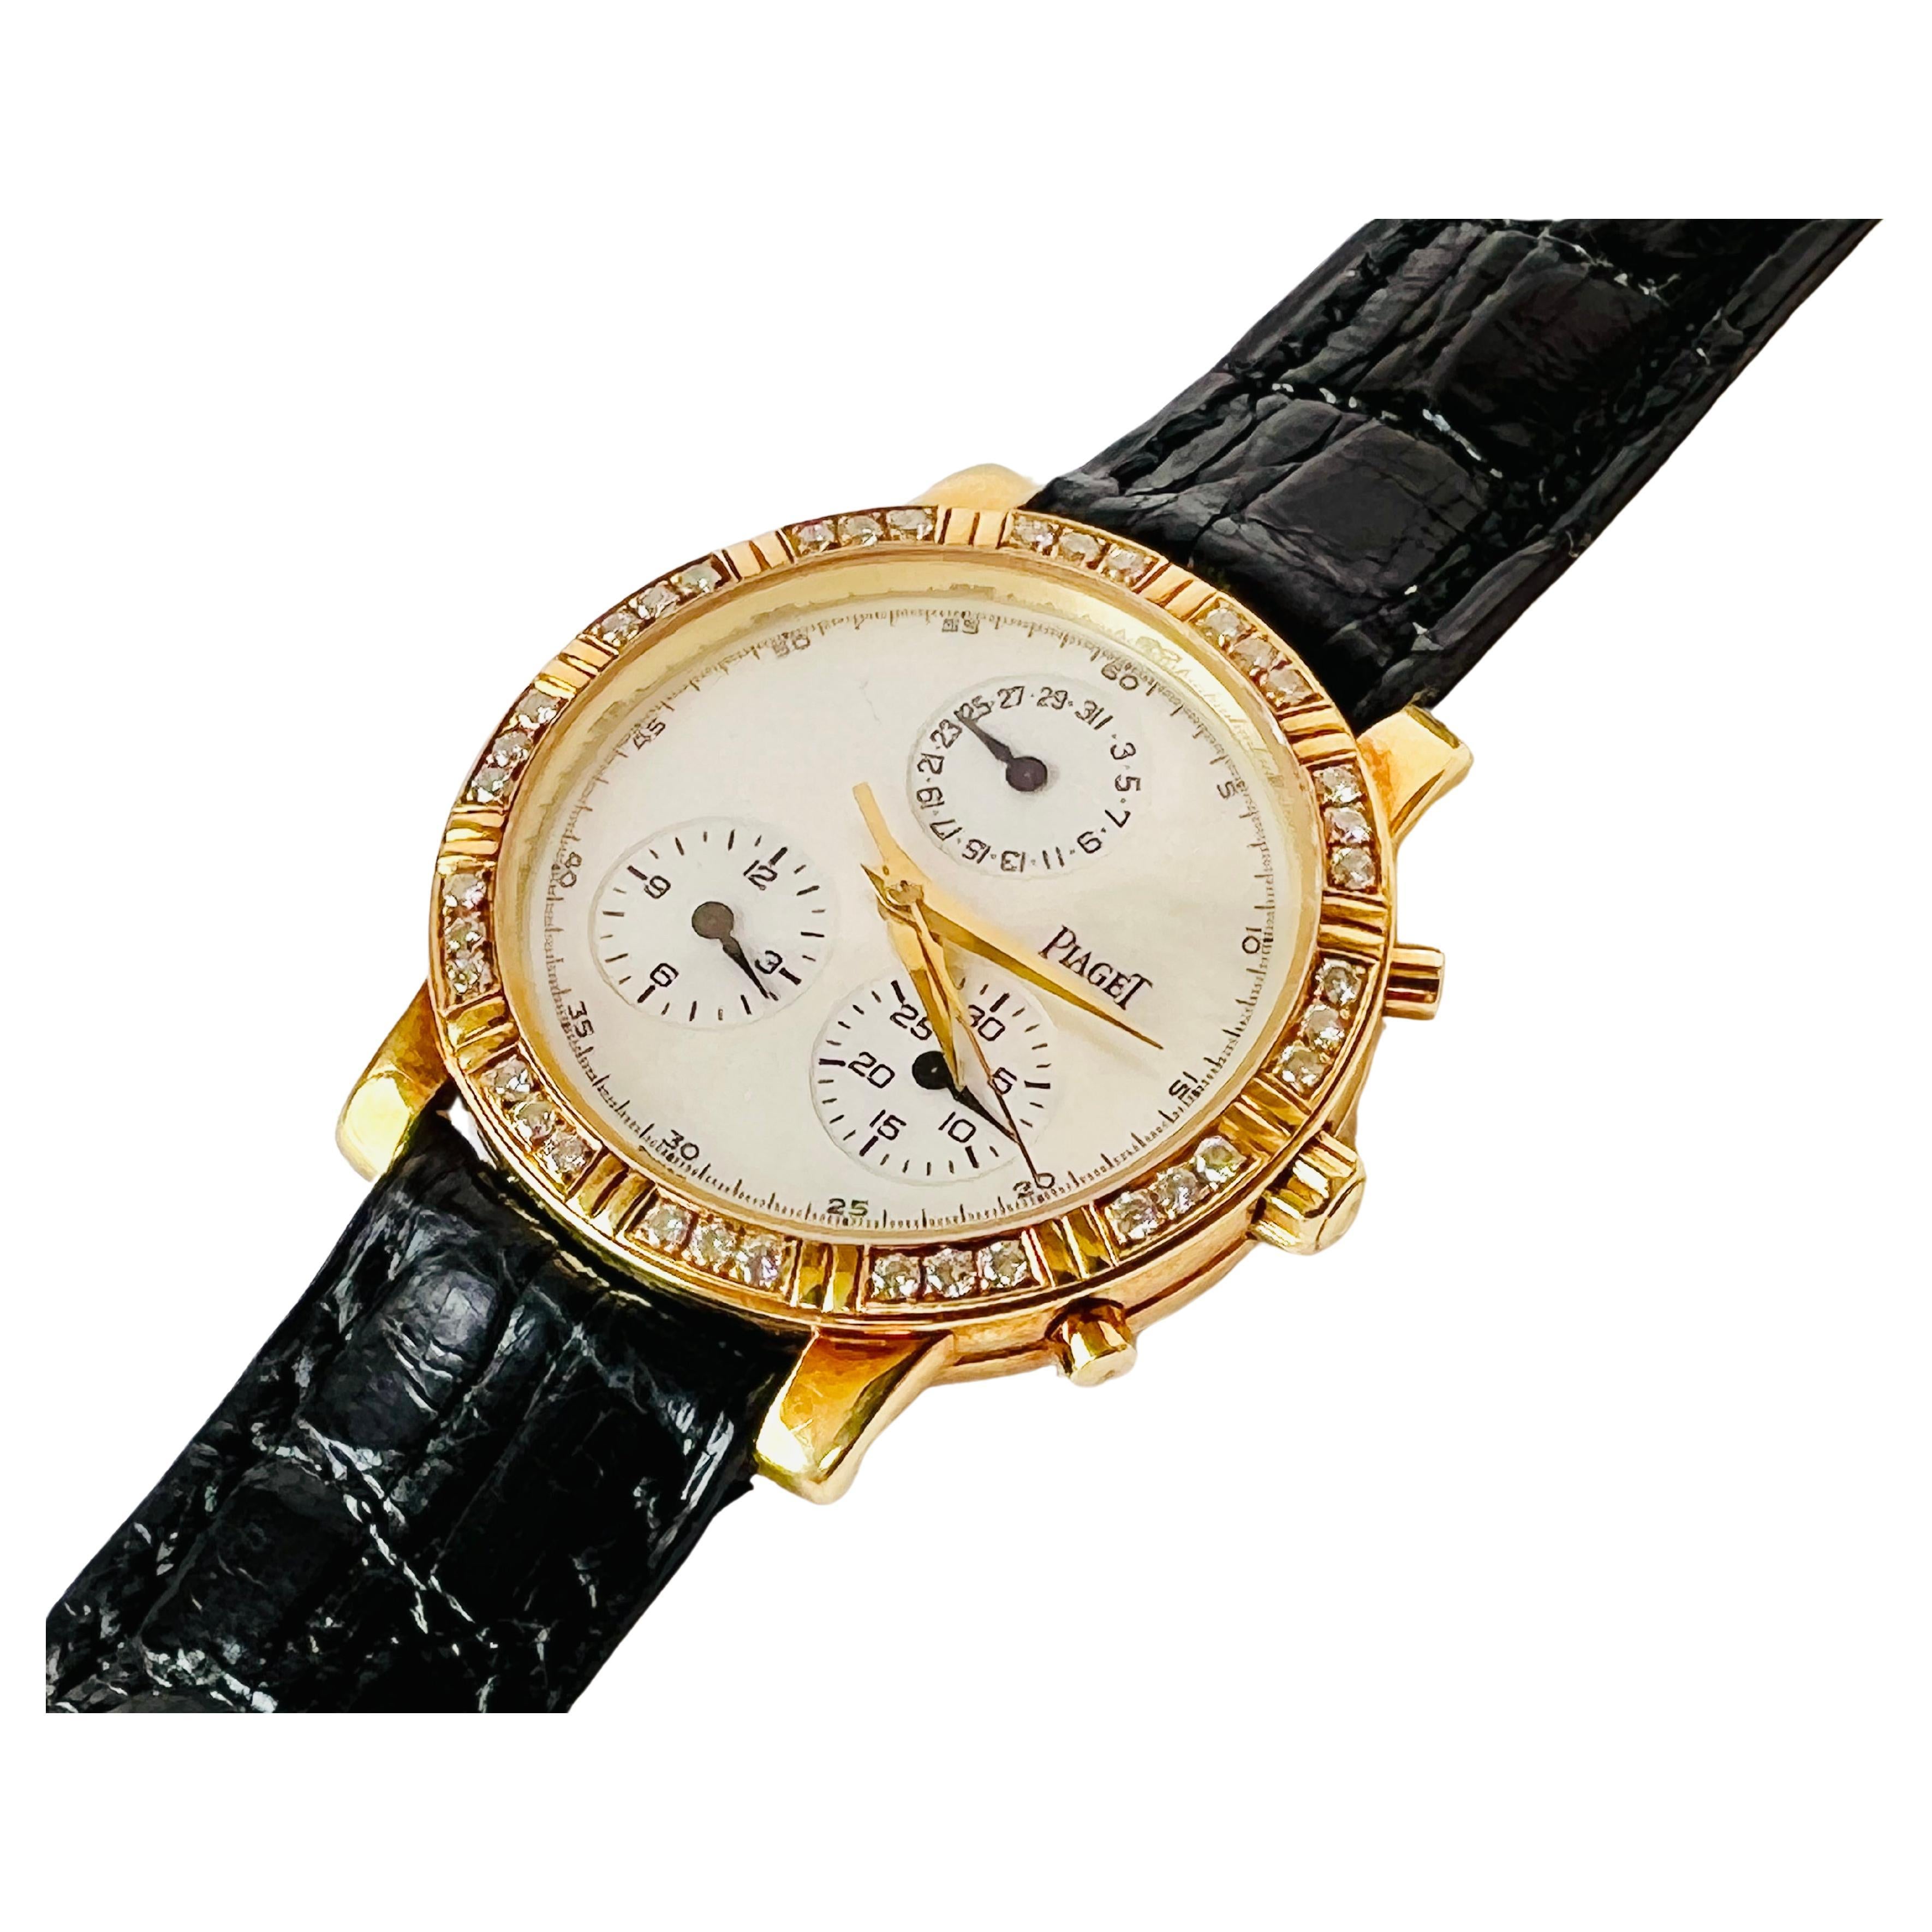 Piaget Haute Complication Chronograph 14013 MOP Dial 18k Gold Diamond Watch